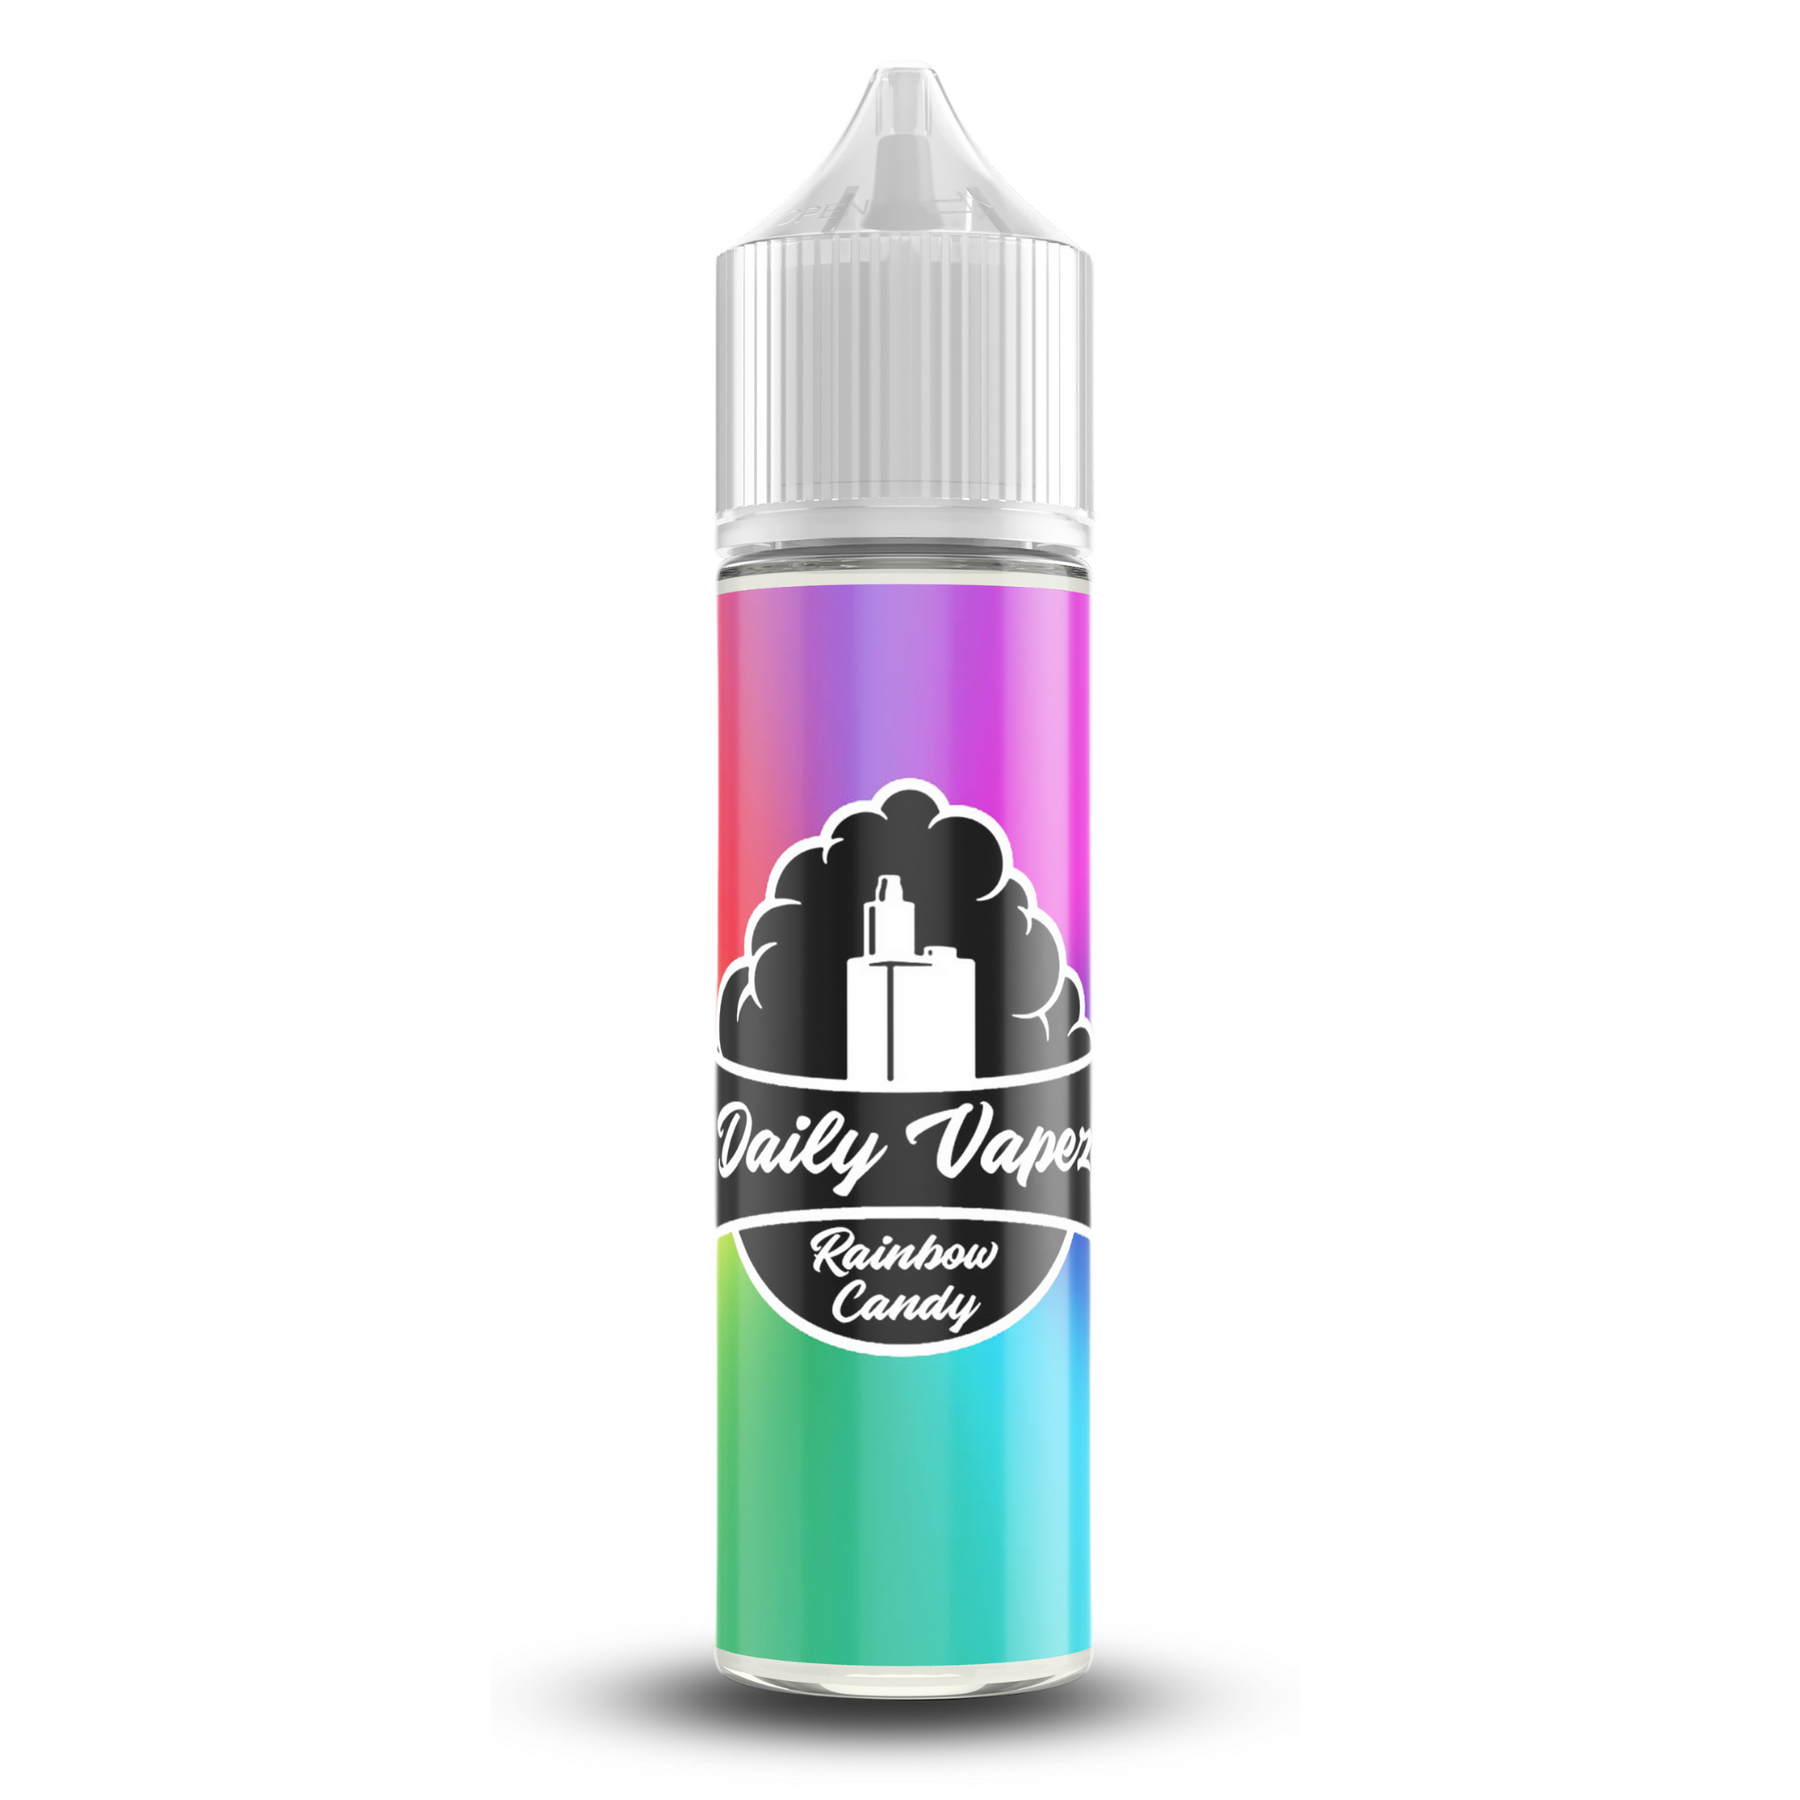 Daily Vapez - Rainbow Candy